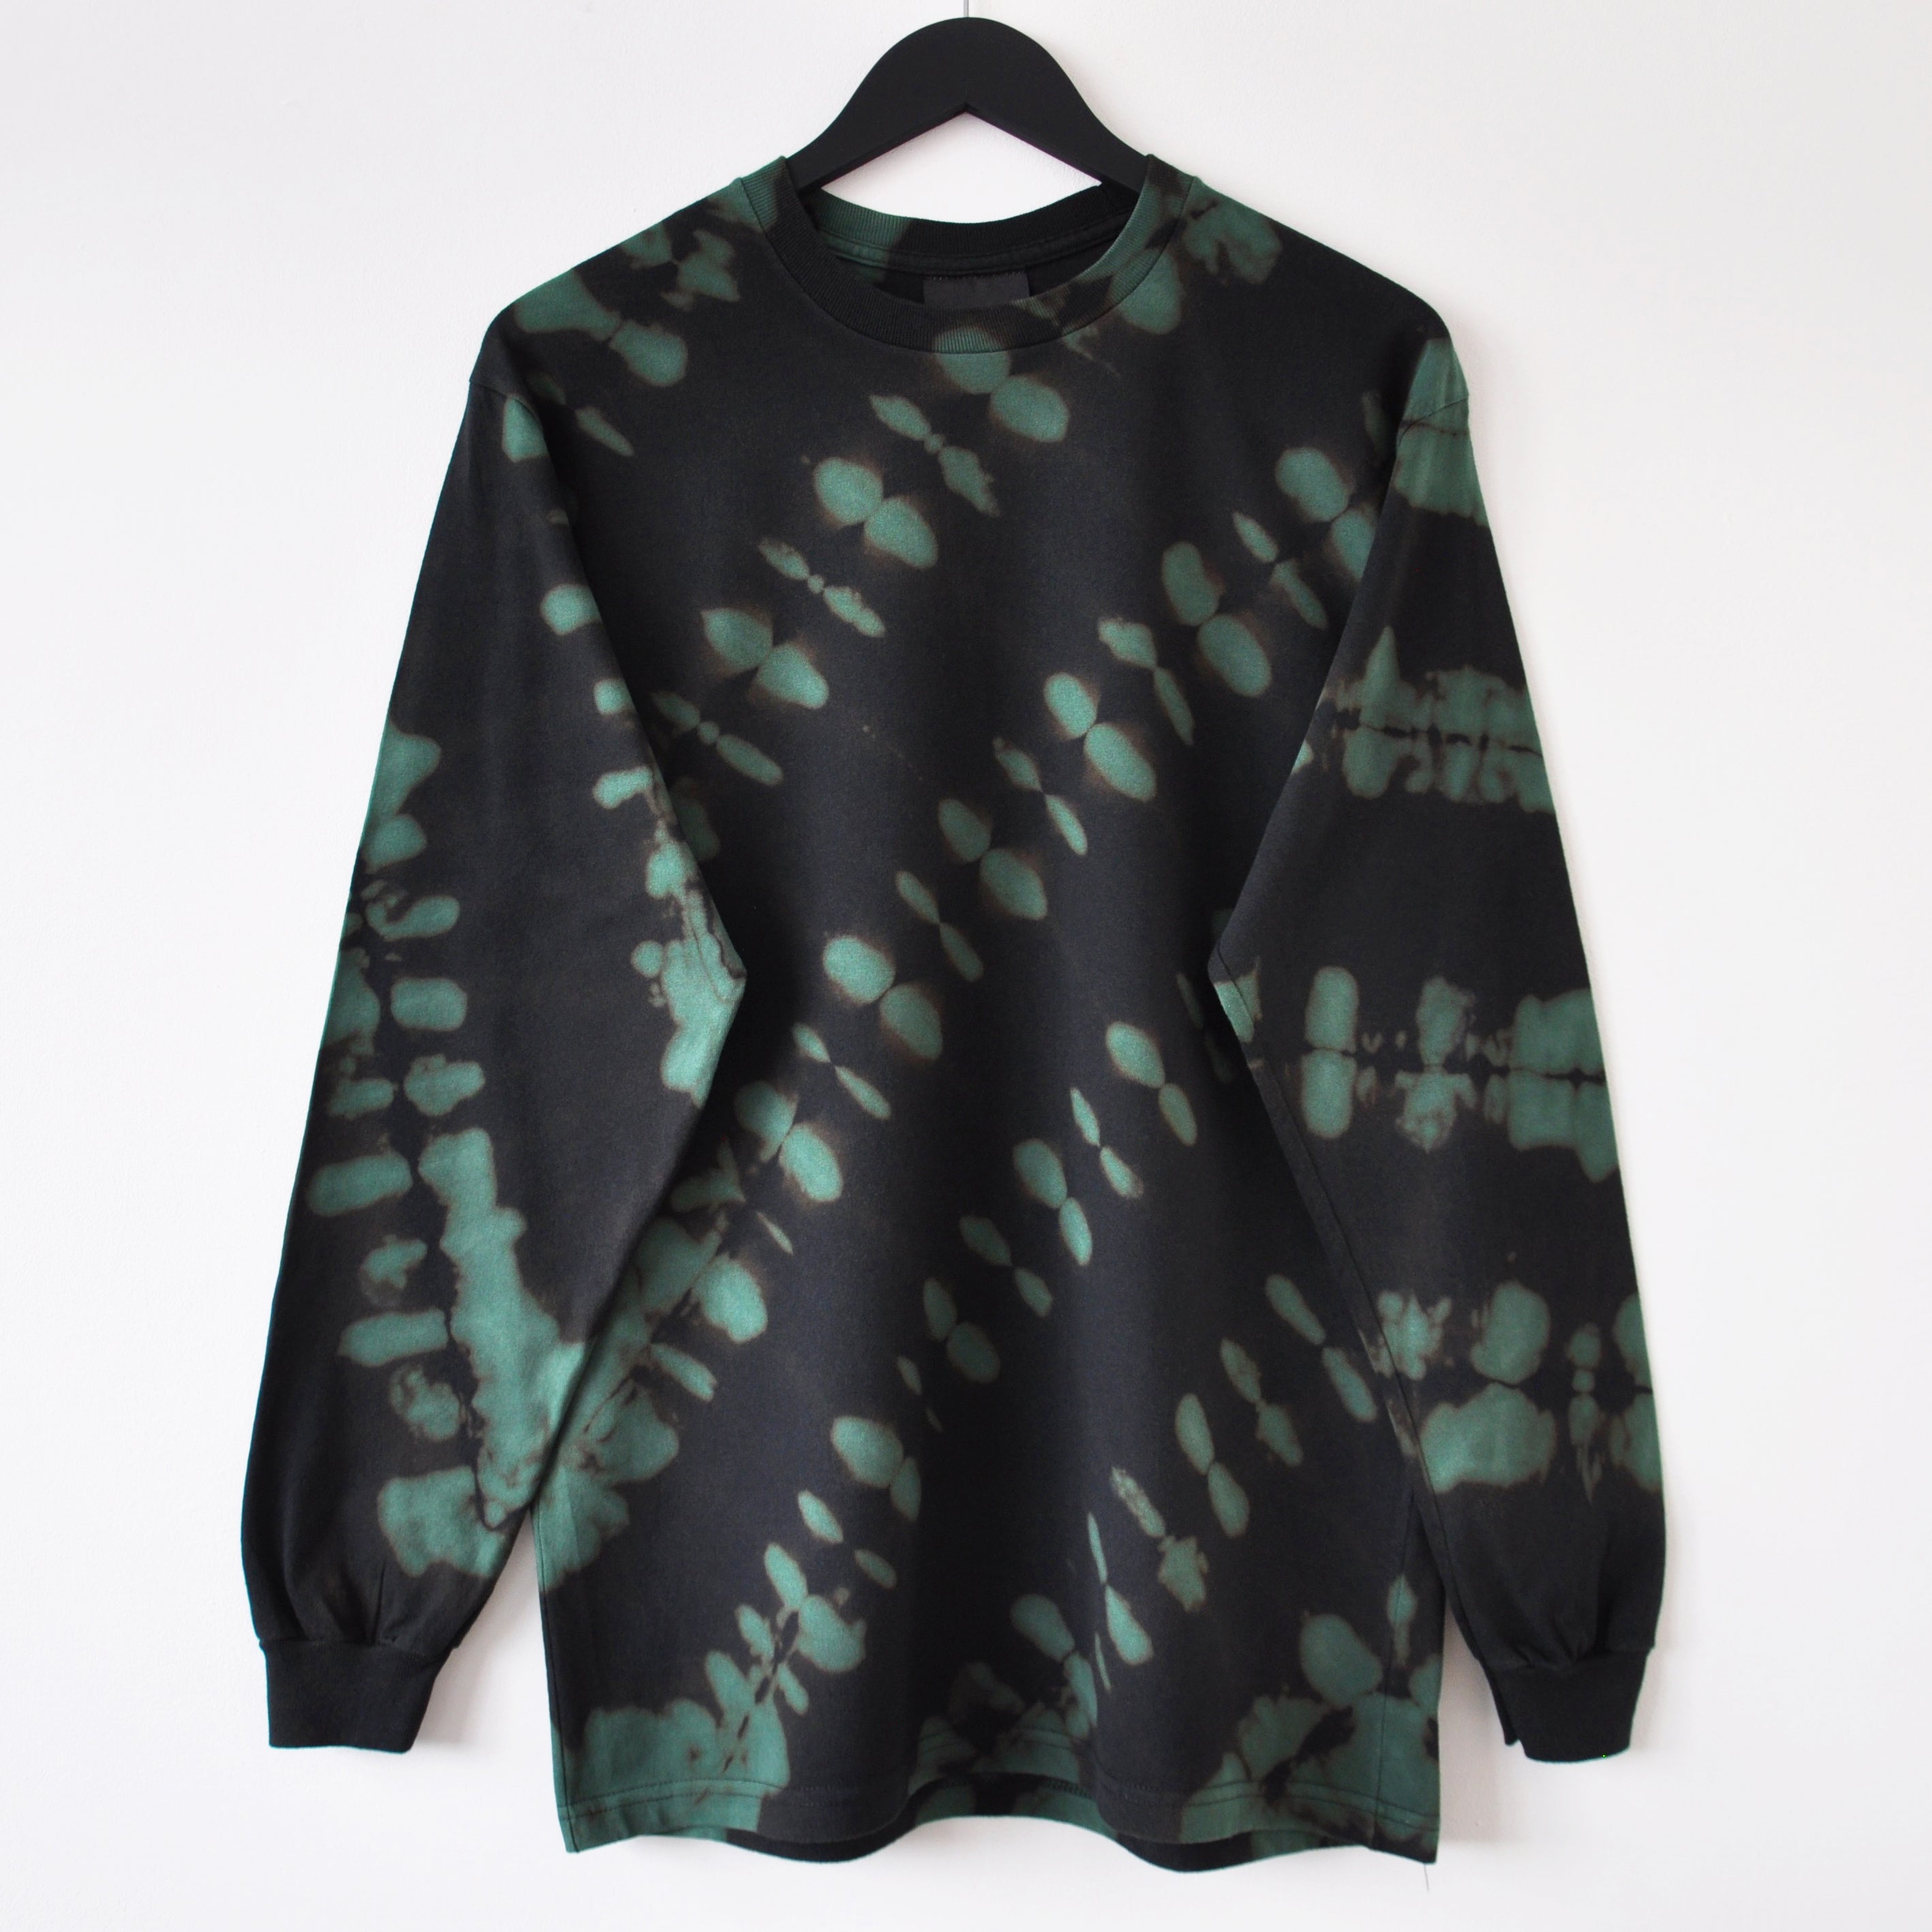 TS5600TD, Tie Dye | Essential Street T-shirts Forest Green Splash / S